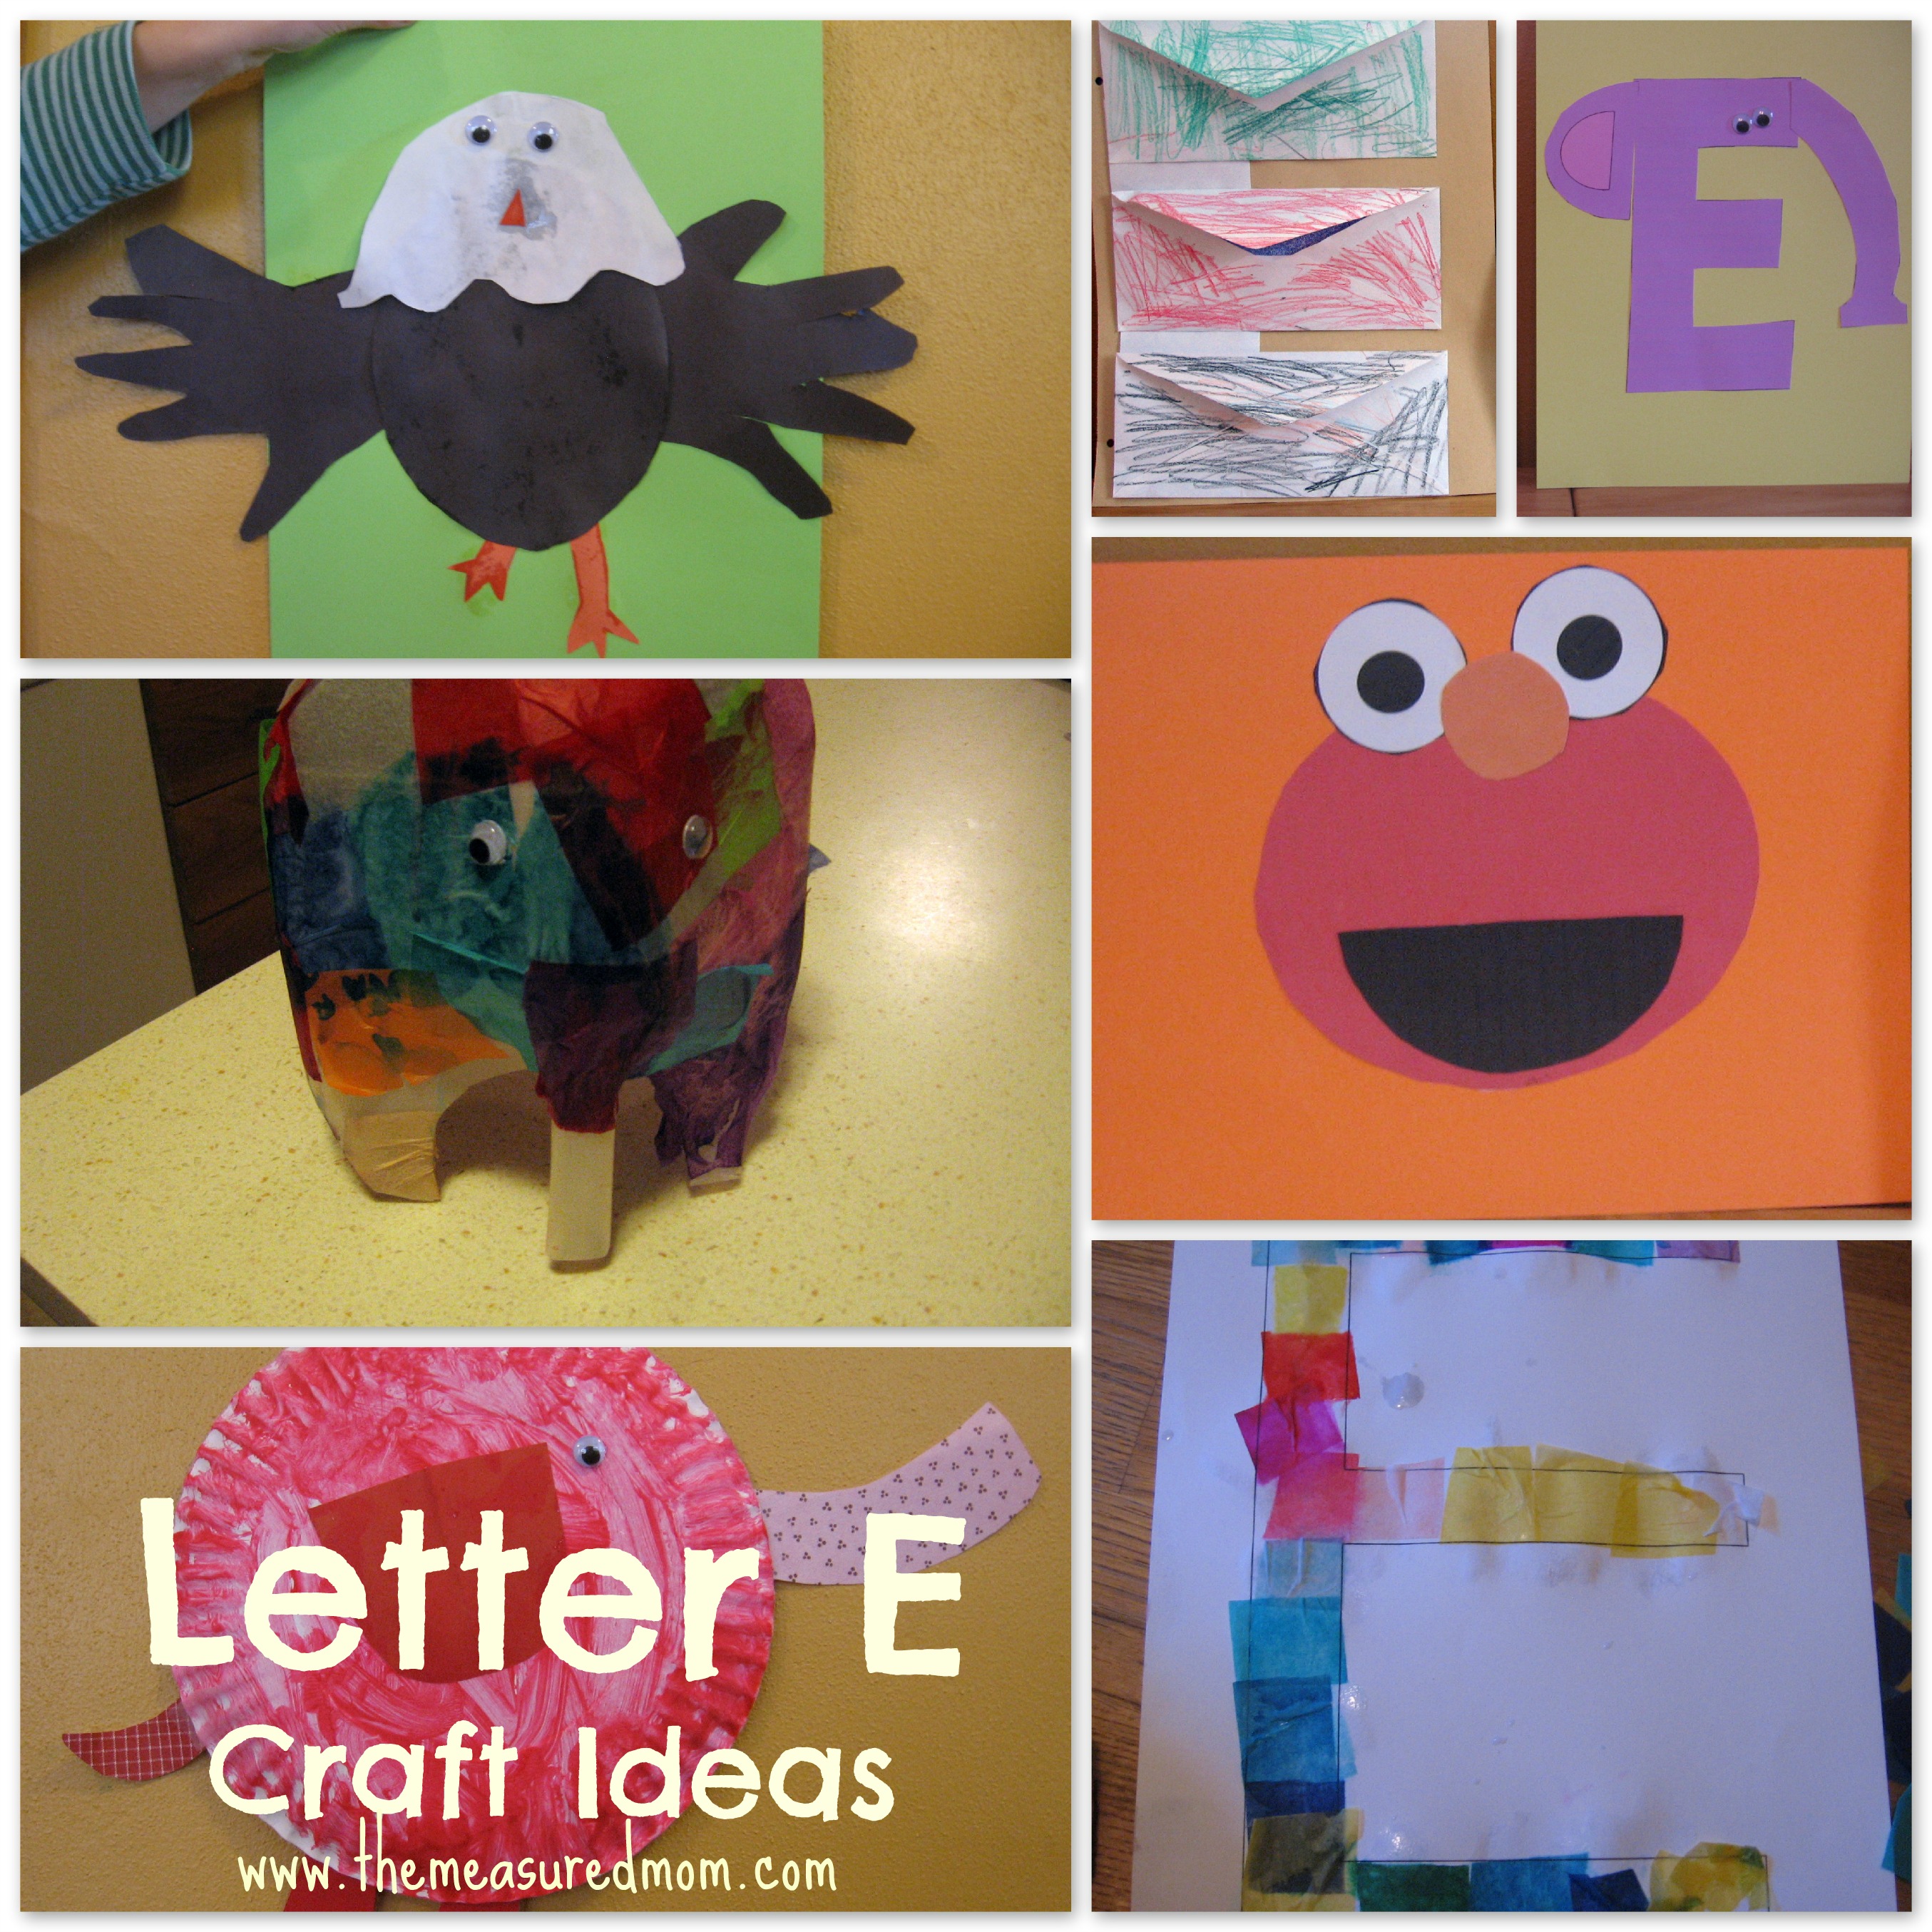 Letter E craft ideas - The Measured Mom